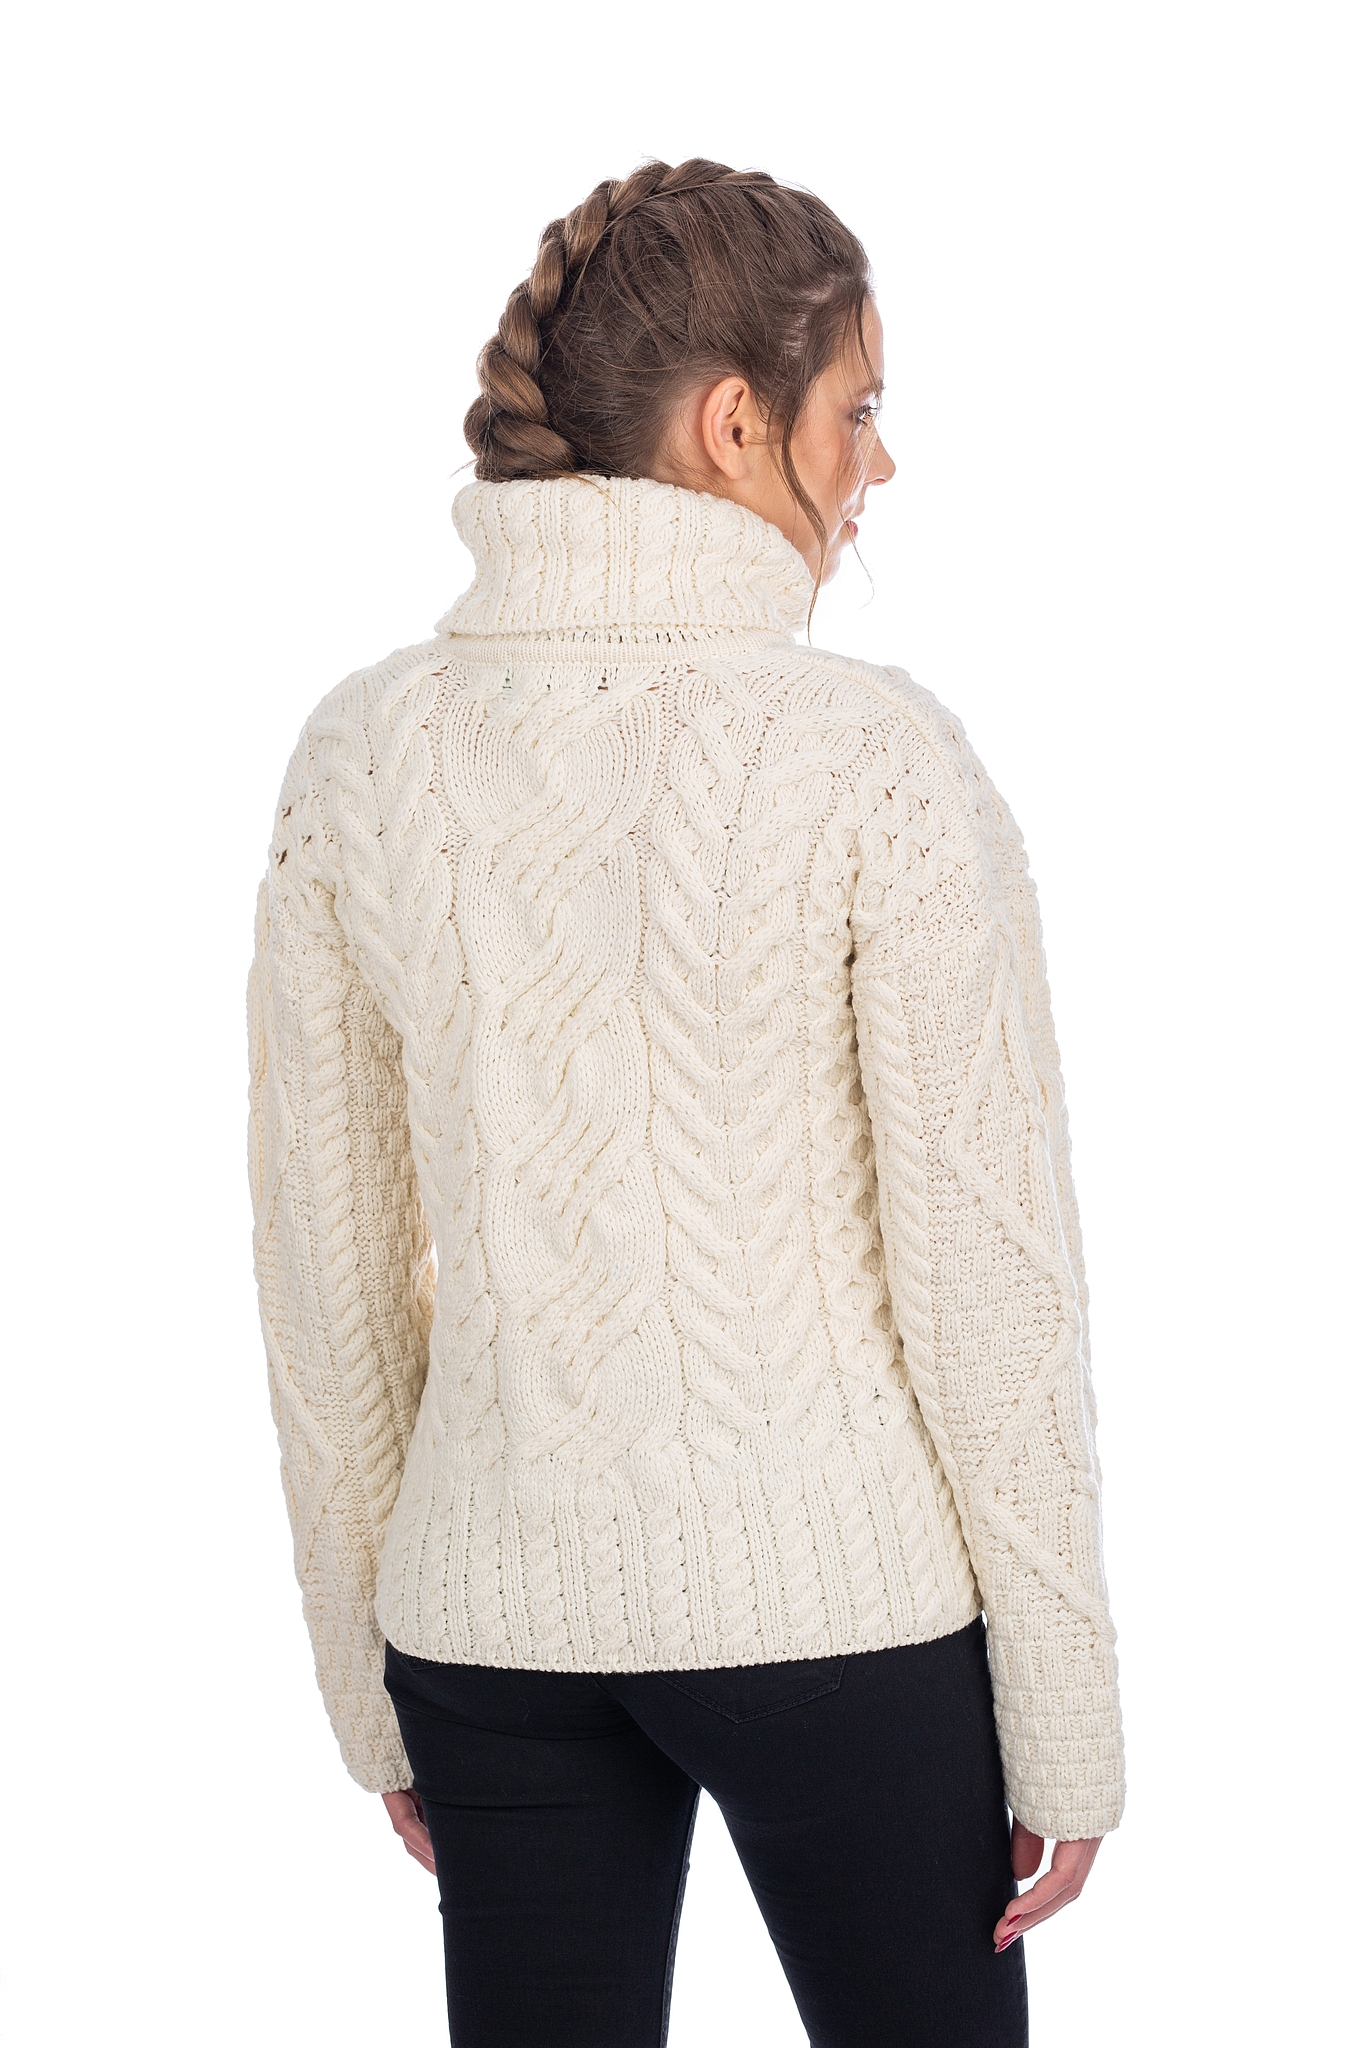 SAOL Irish Aran Sweater 100% Super Soft Premium Merino Wool Cable Knit White Turtleneck Pullover for Women Made in Ireland - image 4 of 5